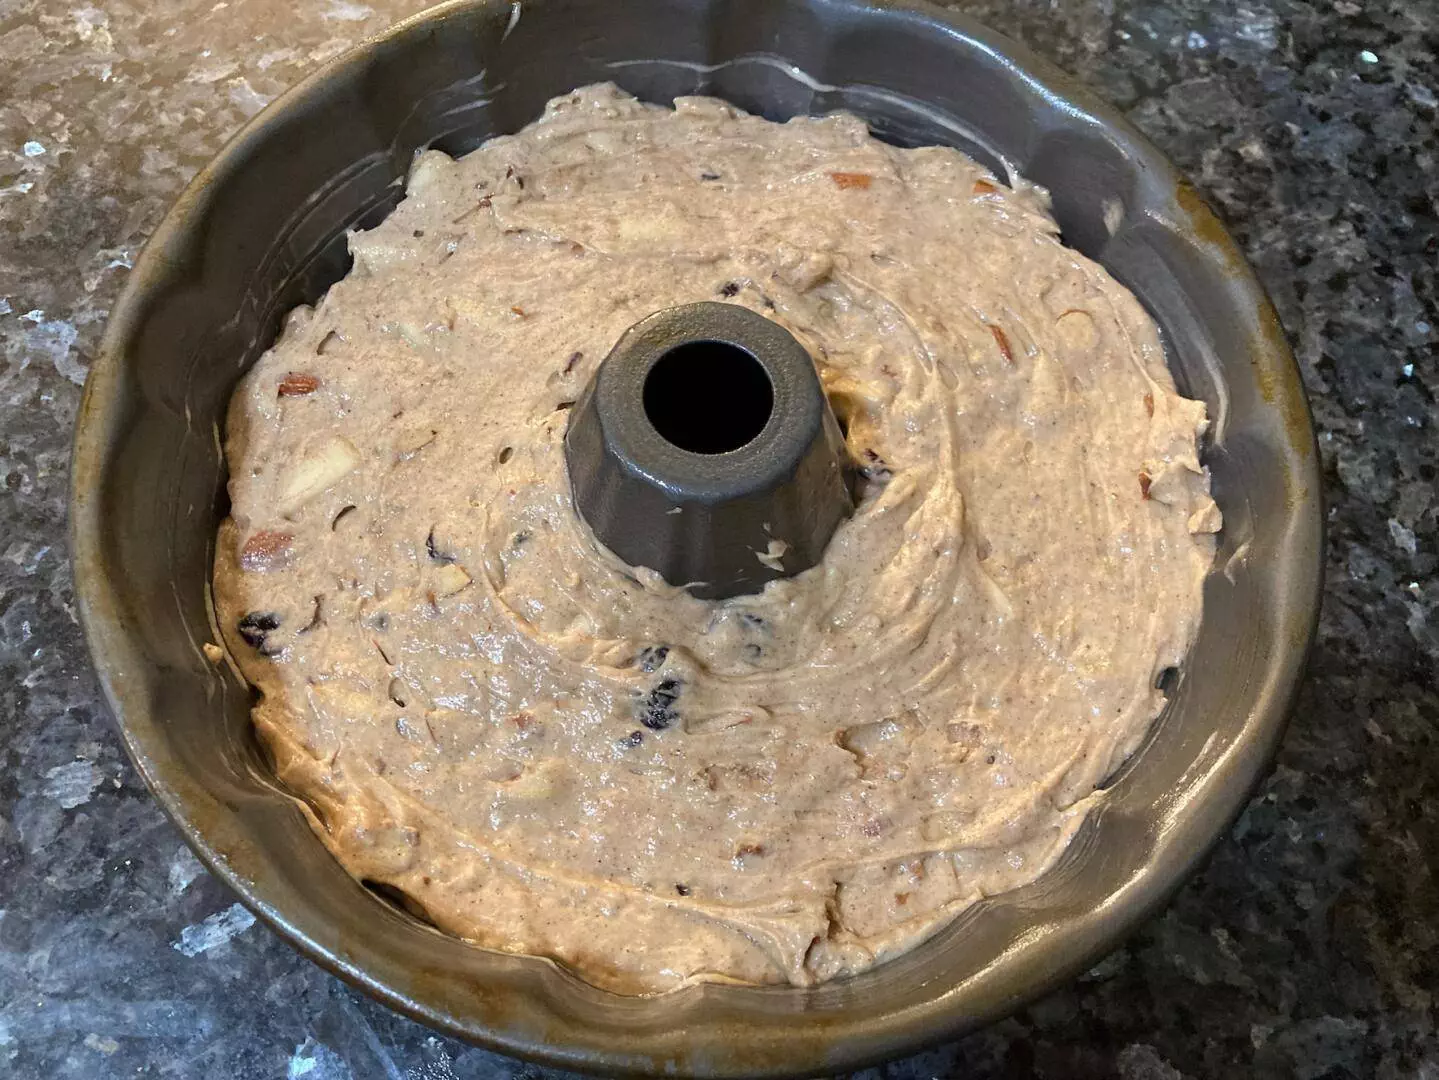 spice cake batter in pan